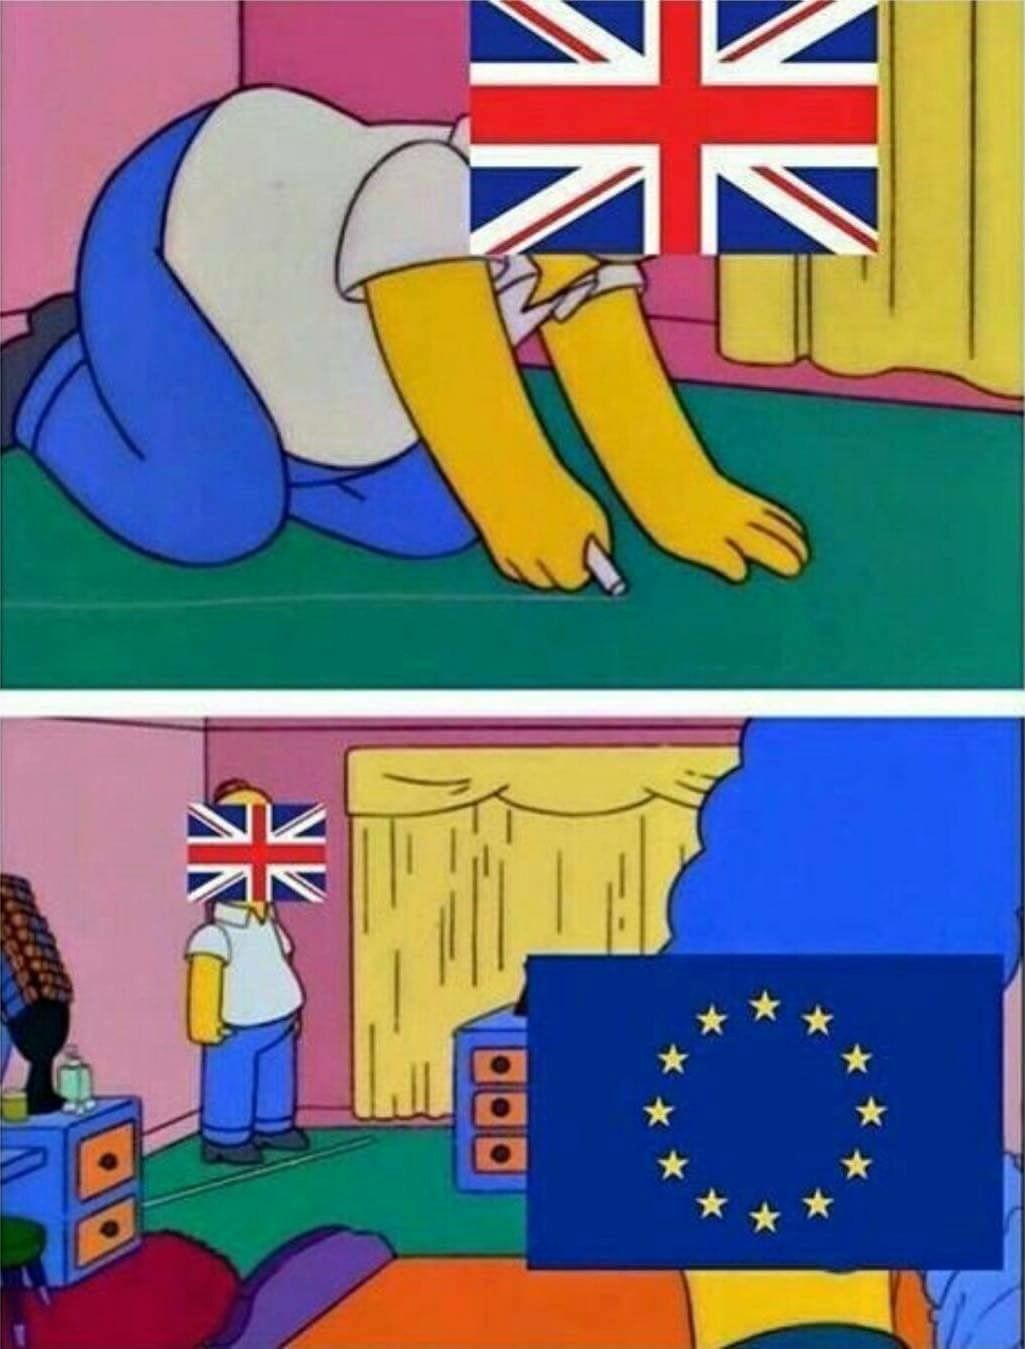 UK's referendum